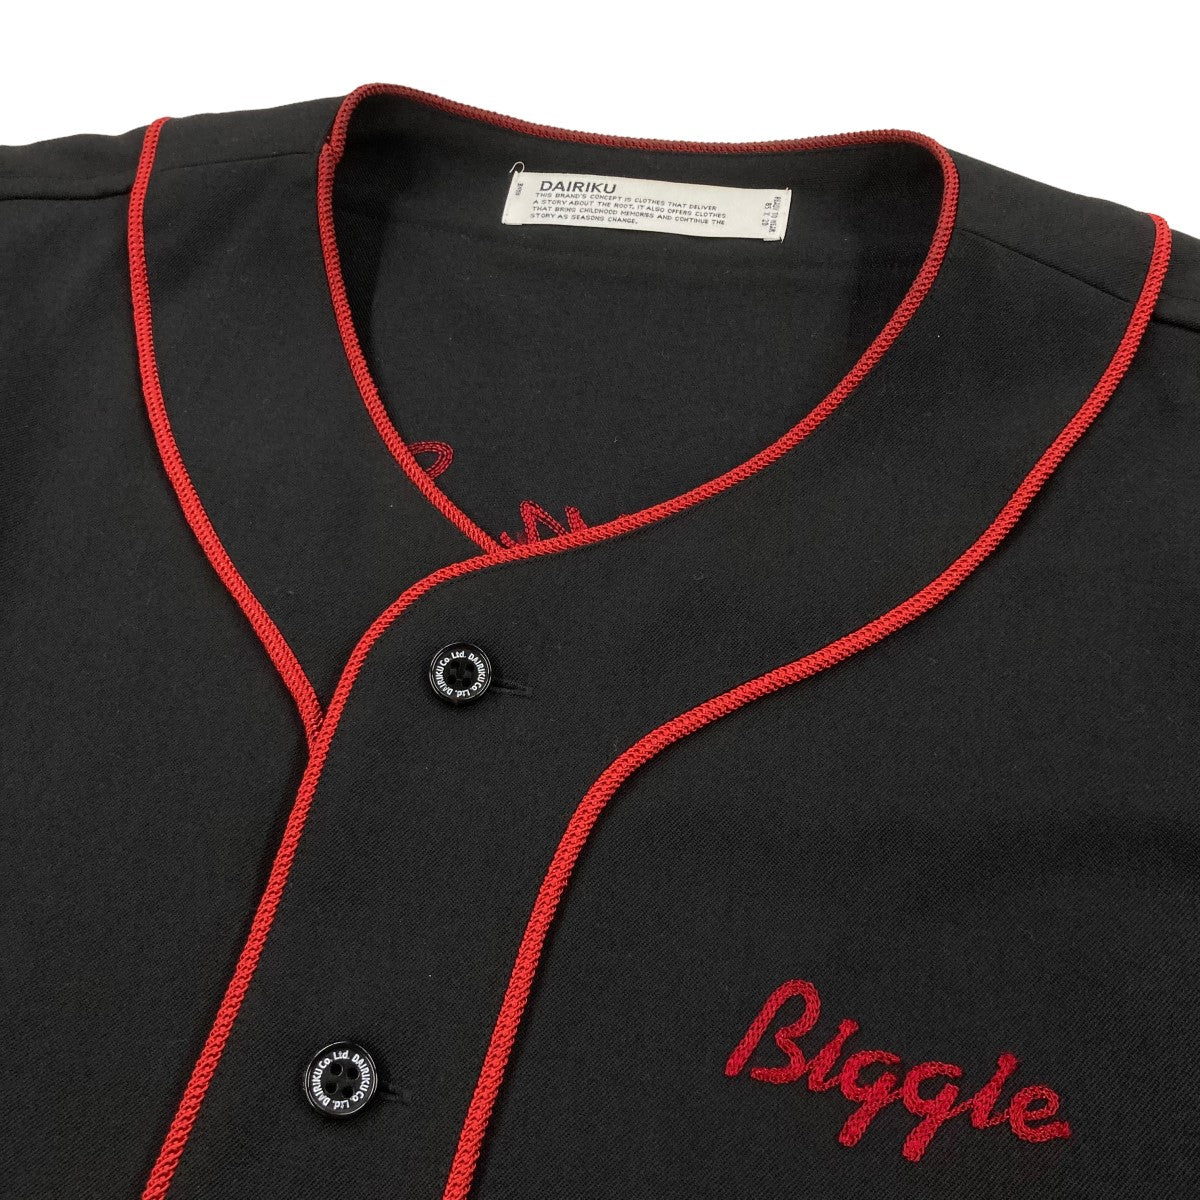 DAIRIKU(ダイリク) 19AWBiggie XL Baseball Shirtベースボールシャツ19AW S 3 19AW S 3 ブラック  サイズ 18｜【公式】カインドオルオンライン ブランド古着・中古通販【kindal】